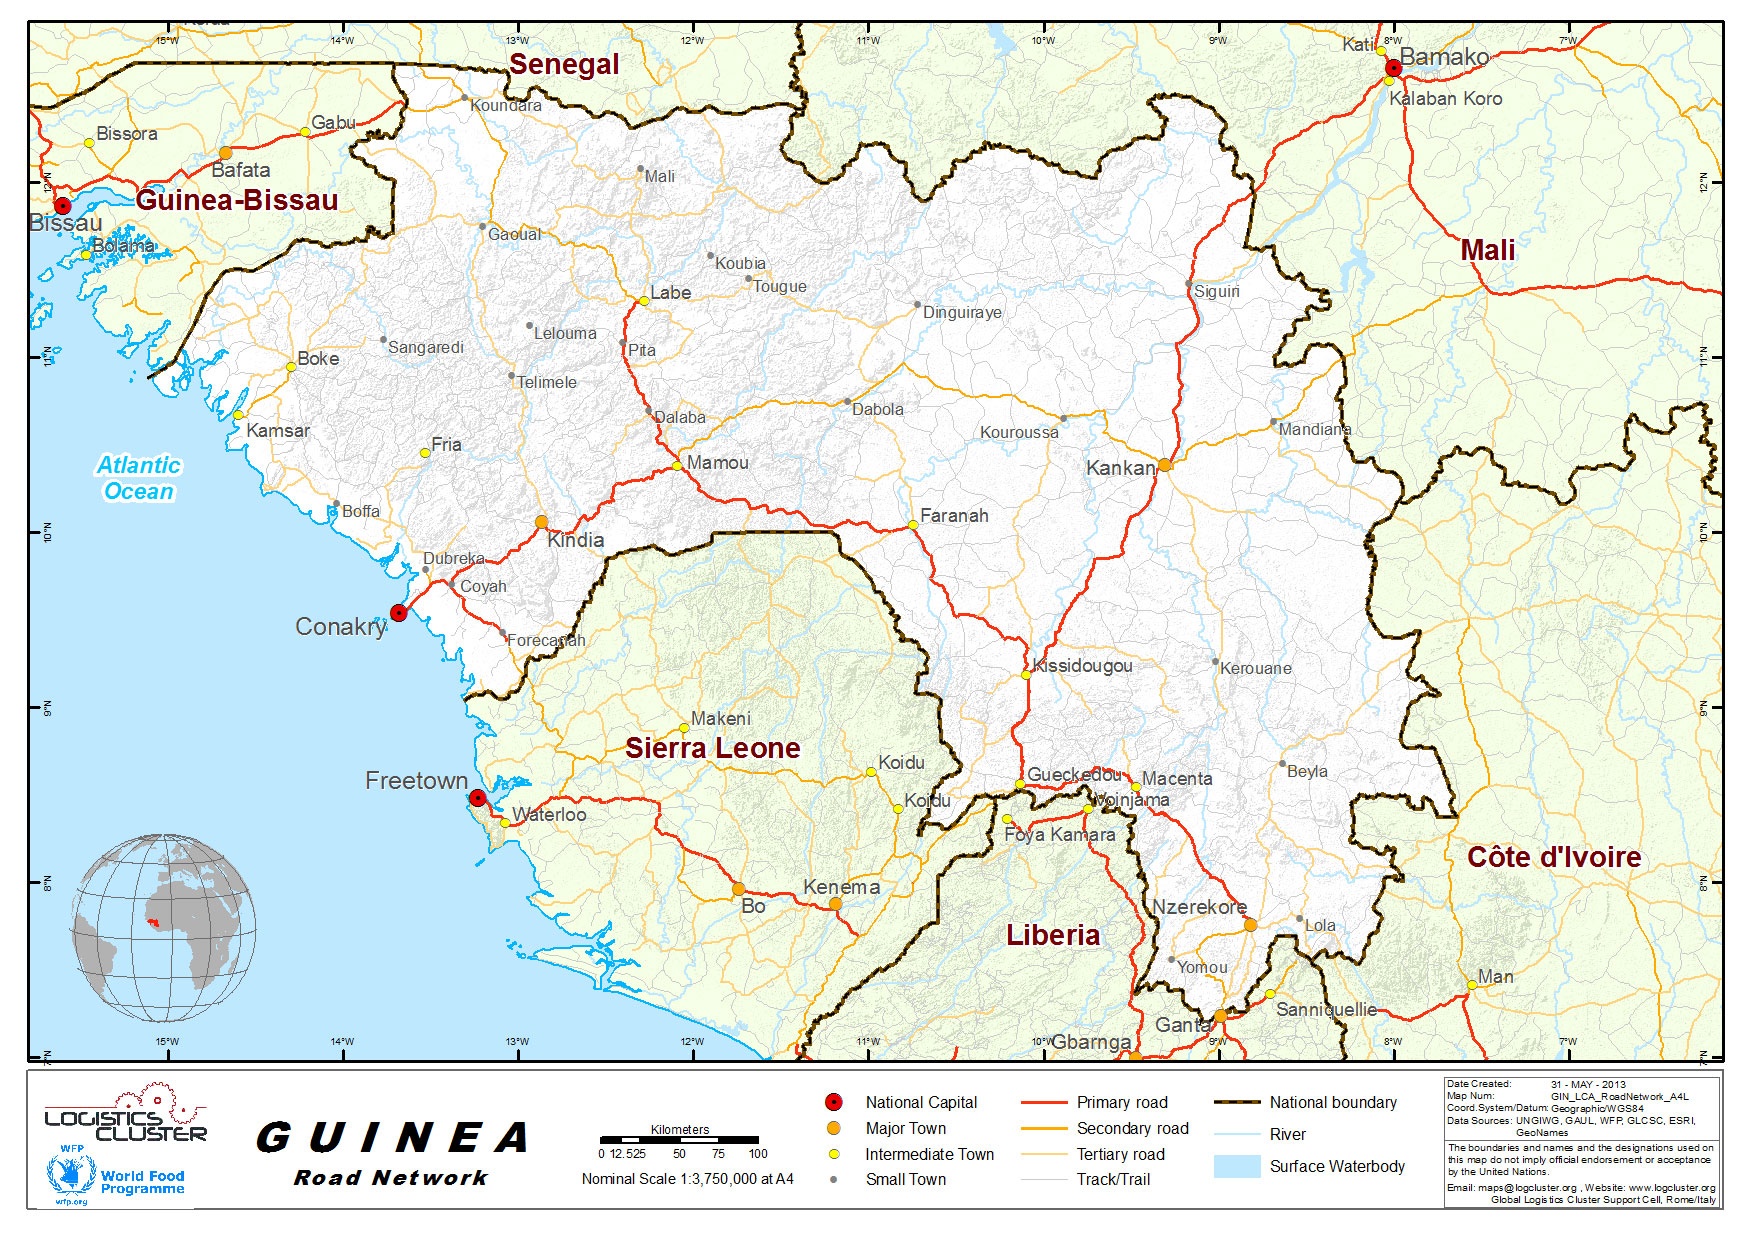 GLCSC LCA Guinea Map%2520Road%2520Network 151228%2520xls  Version 1 ModificationDate 1460100000000 Api V2